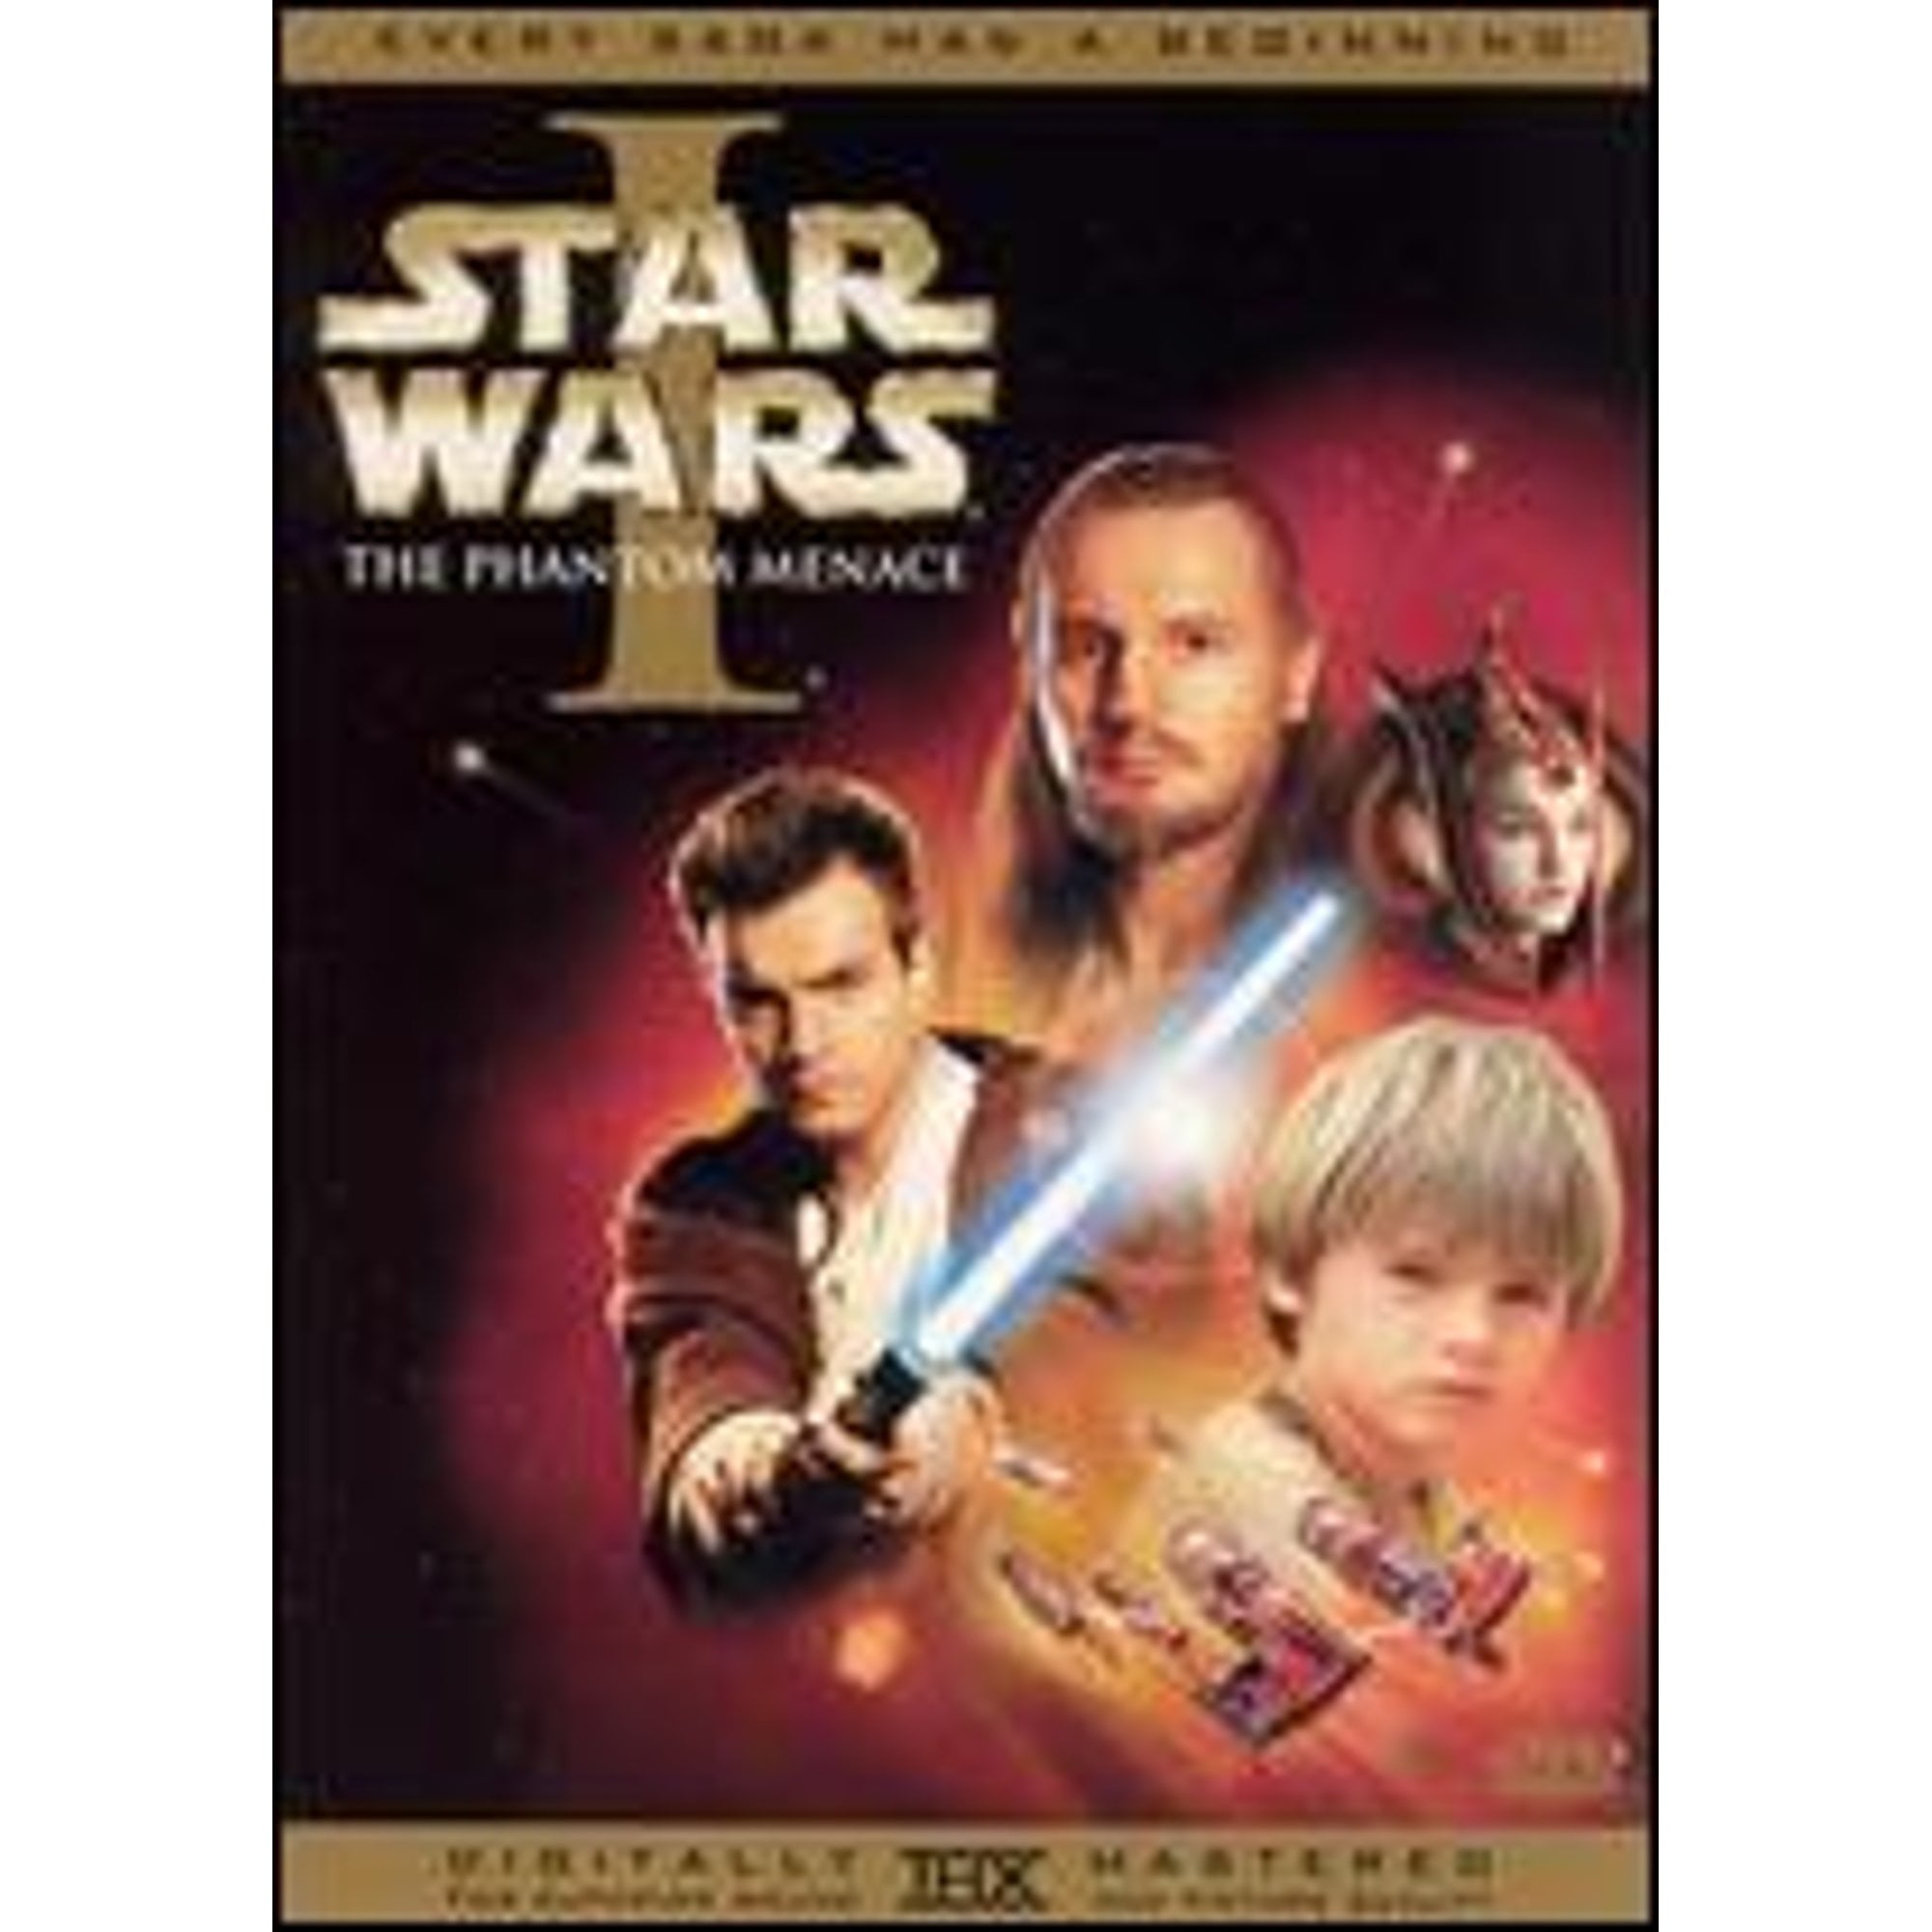 Qui Gon Jinn or Liam Neeson <3  The phantom menace, Star wars, Star wars  poster